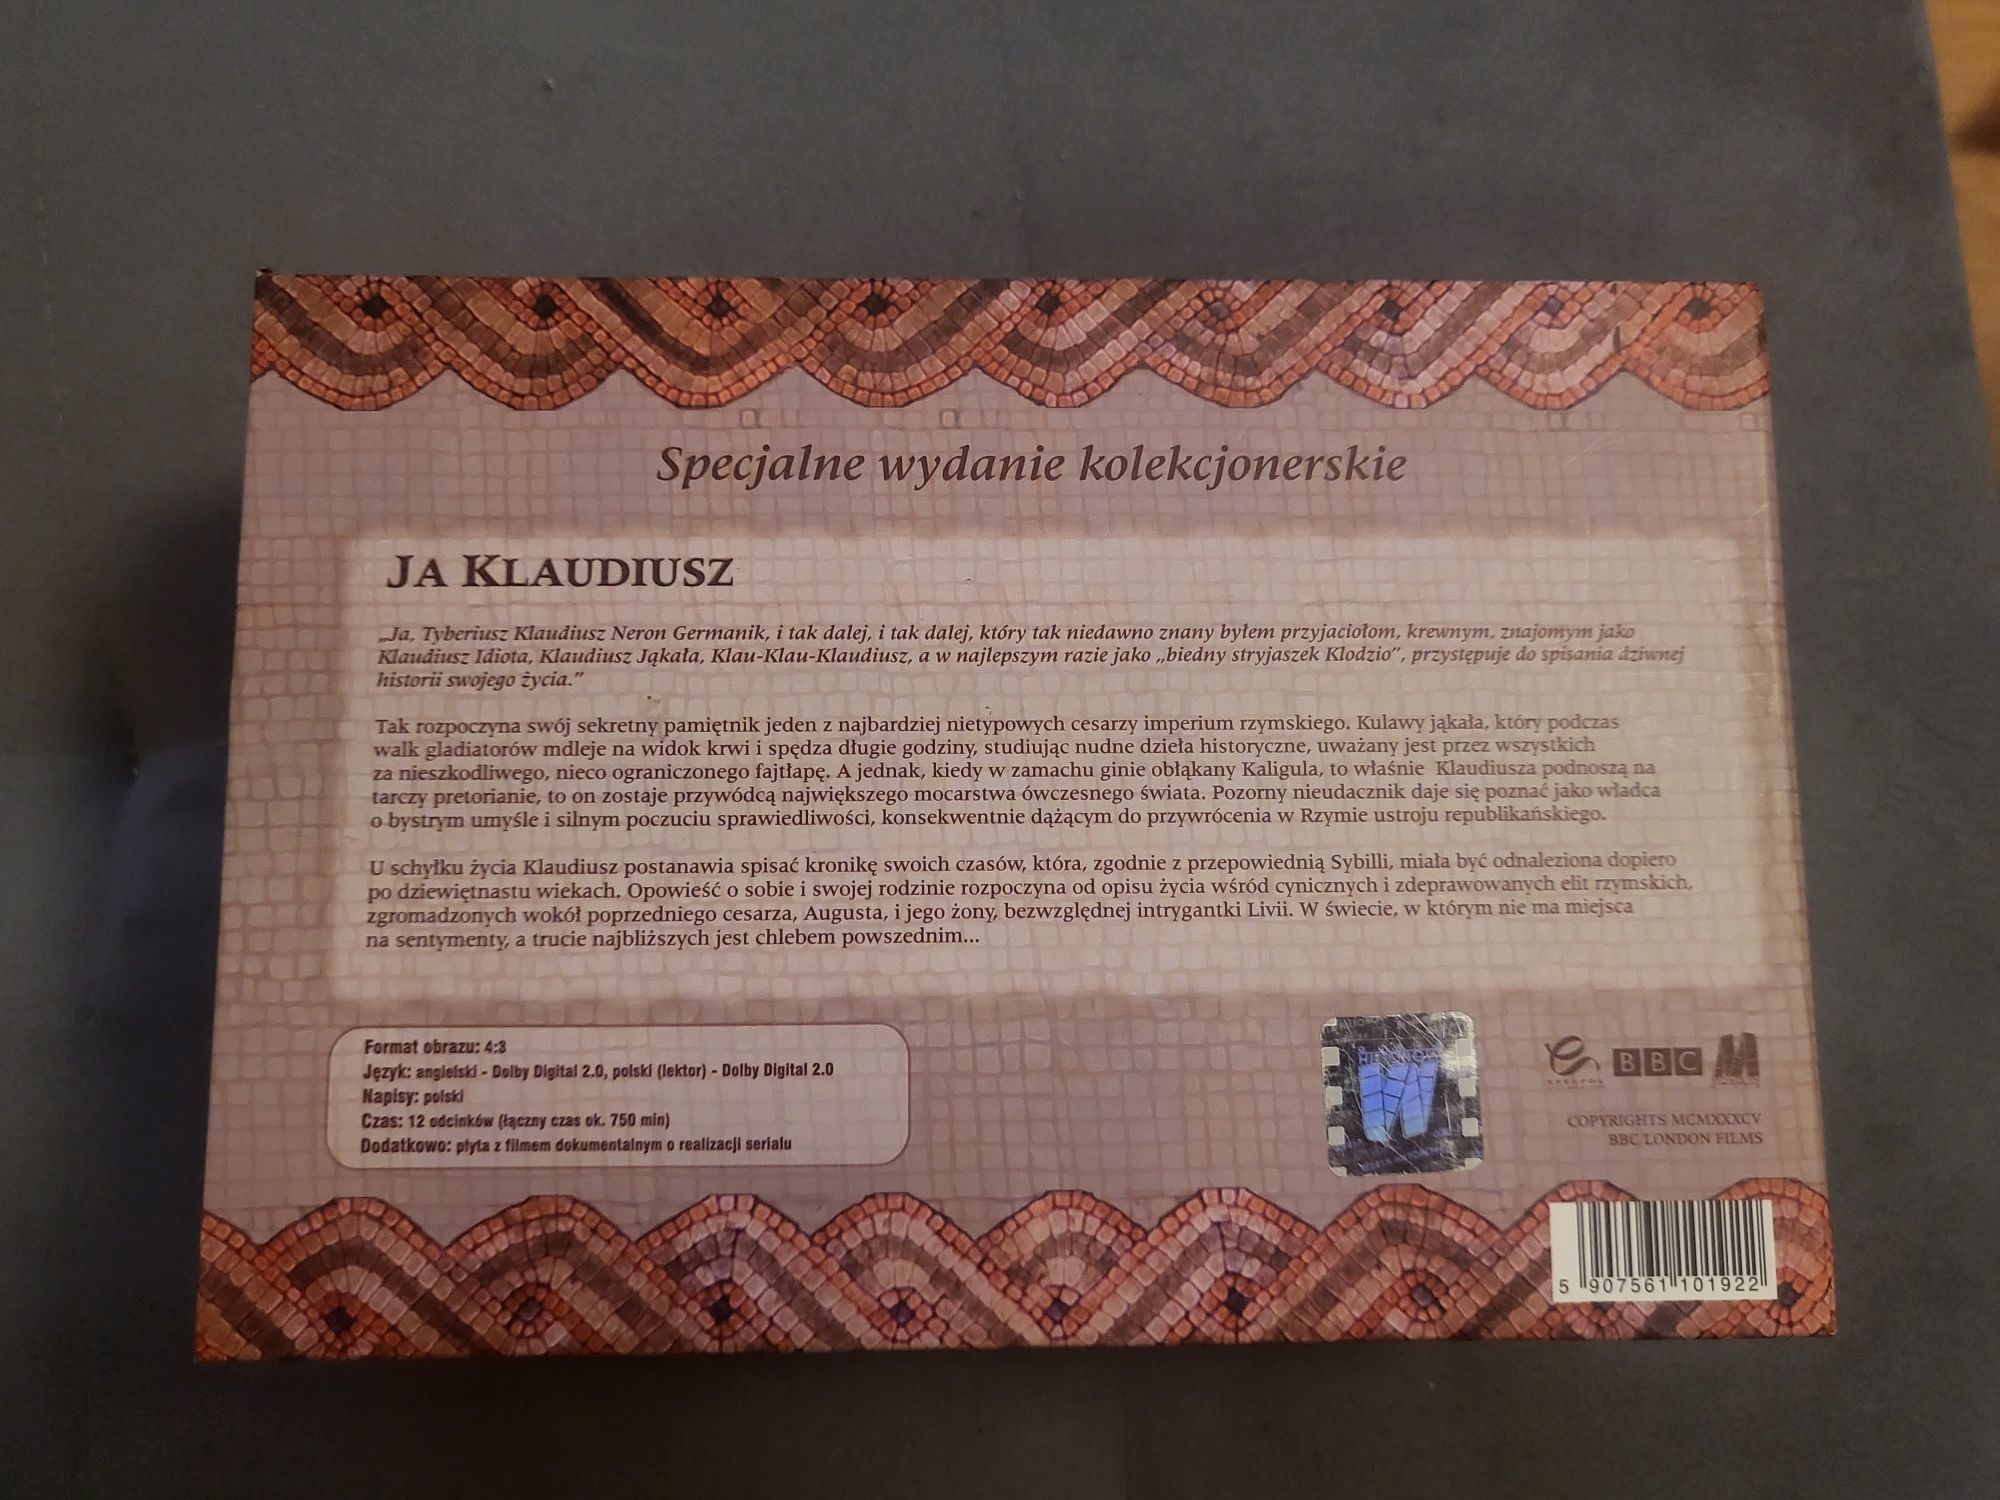 Ja Klaudiusz box 5 DVD